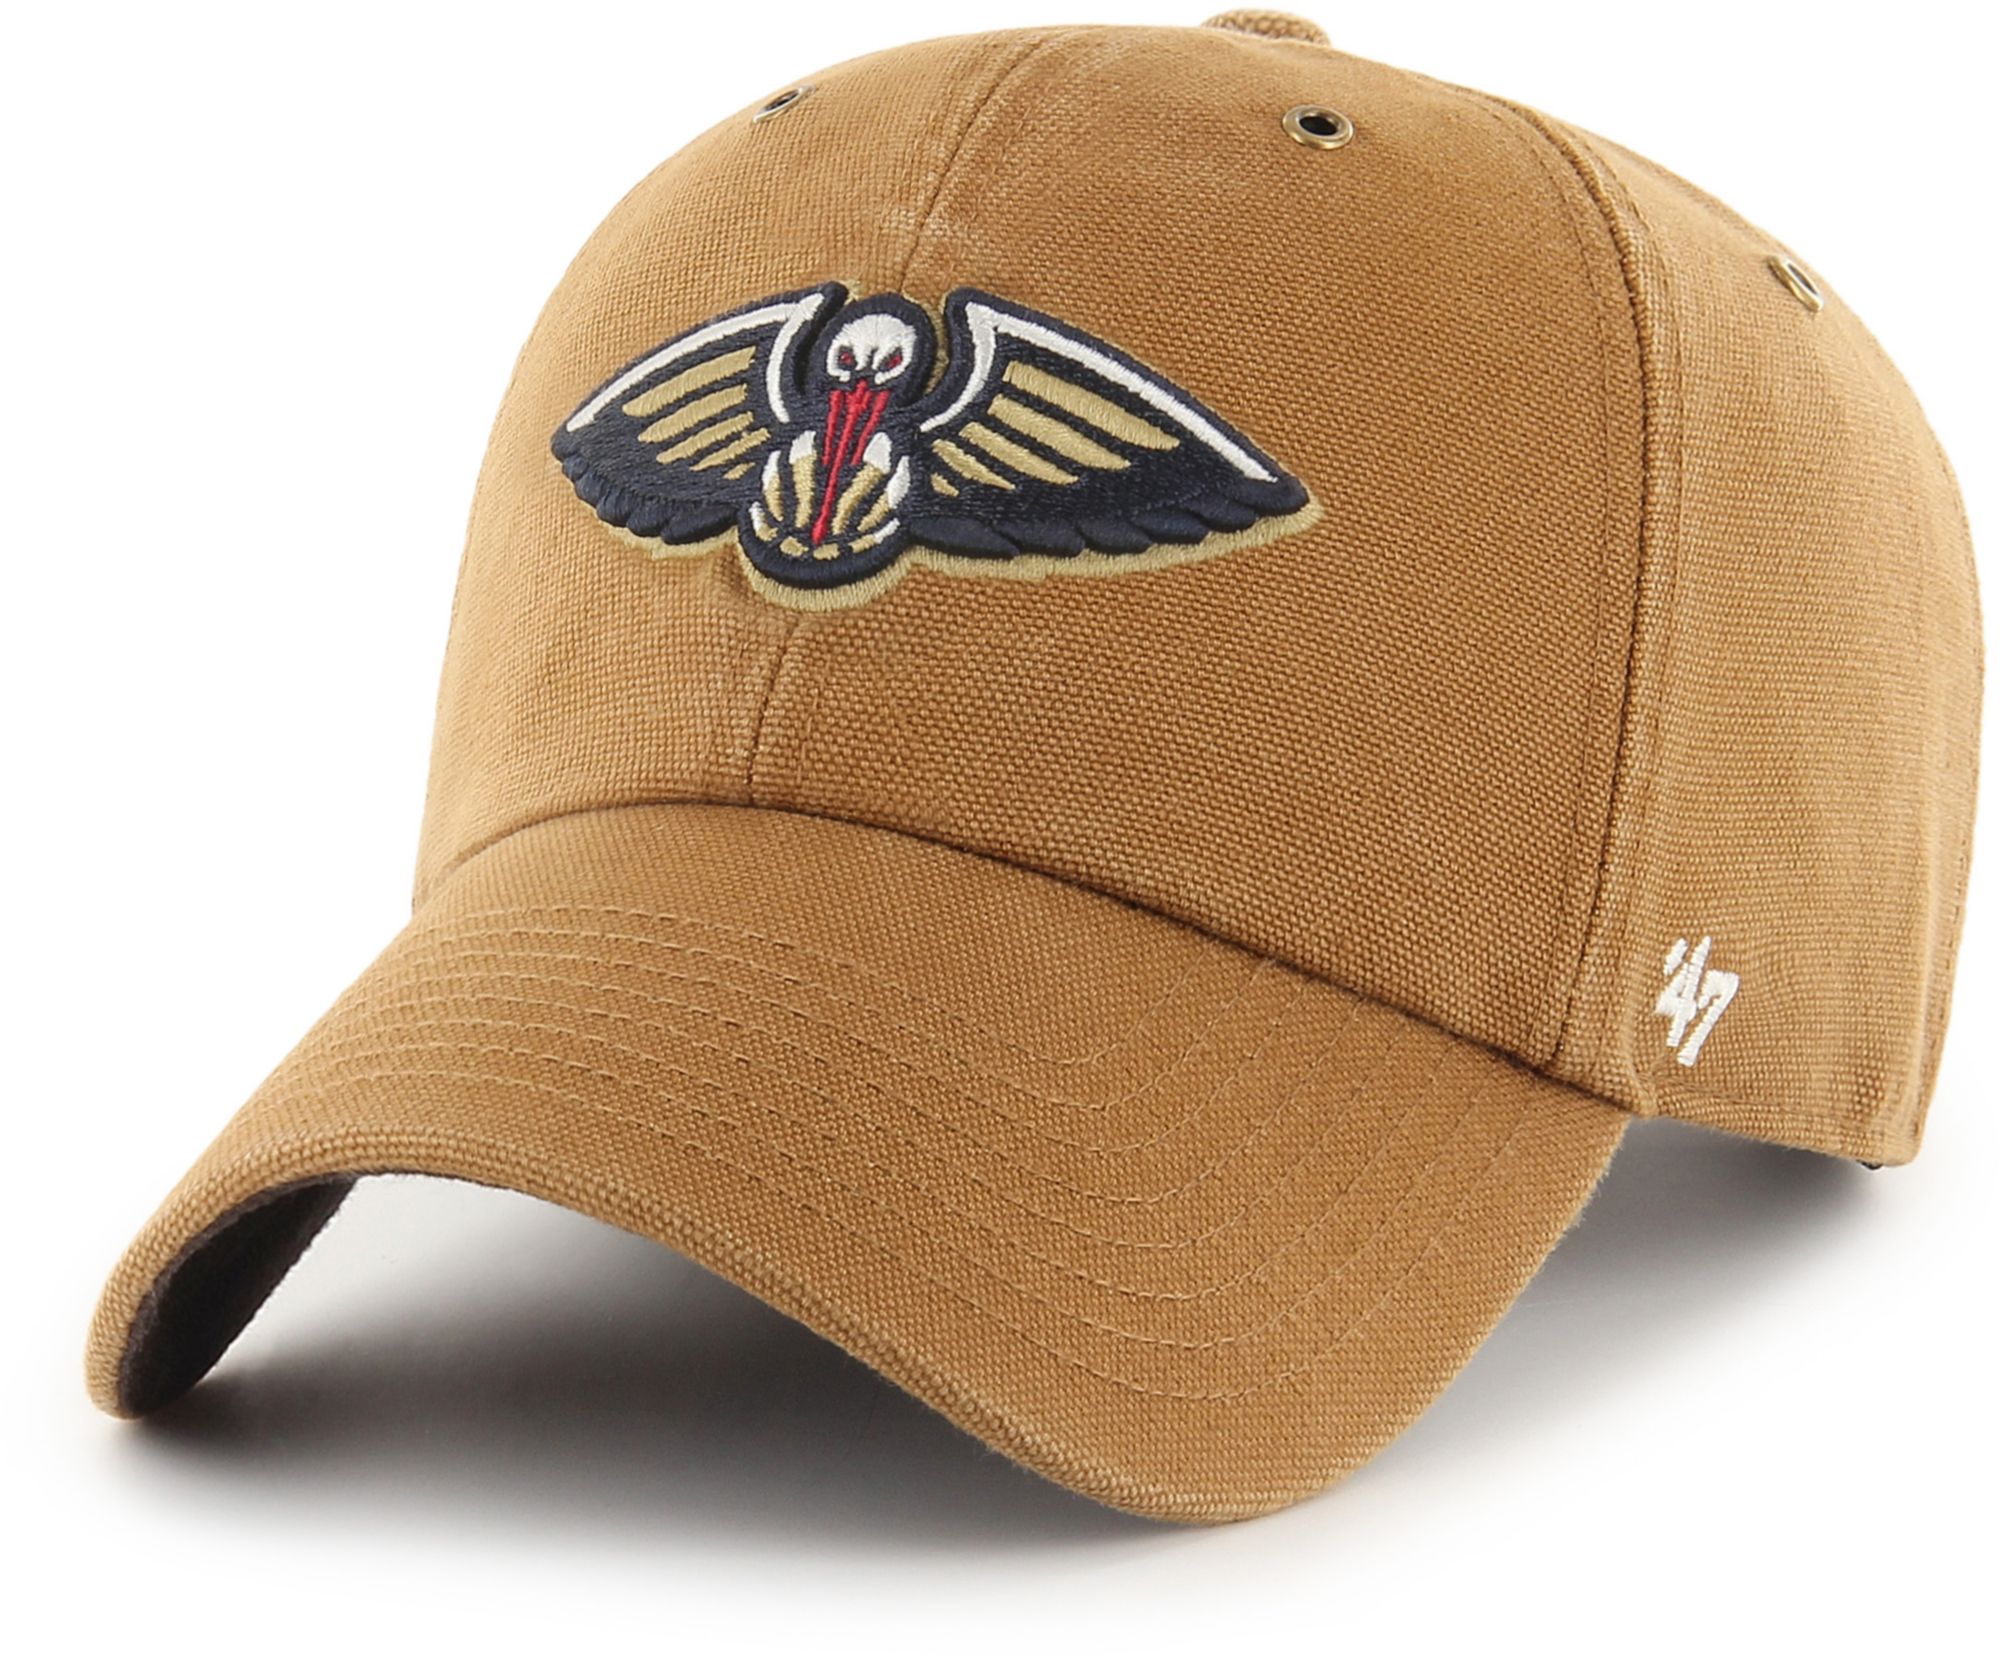 New Orleans Pelicans CUFFED-VISOR KNIT BEANIE Navy Hat